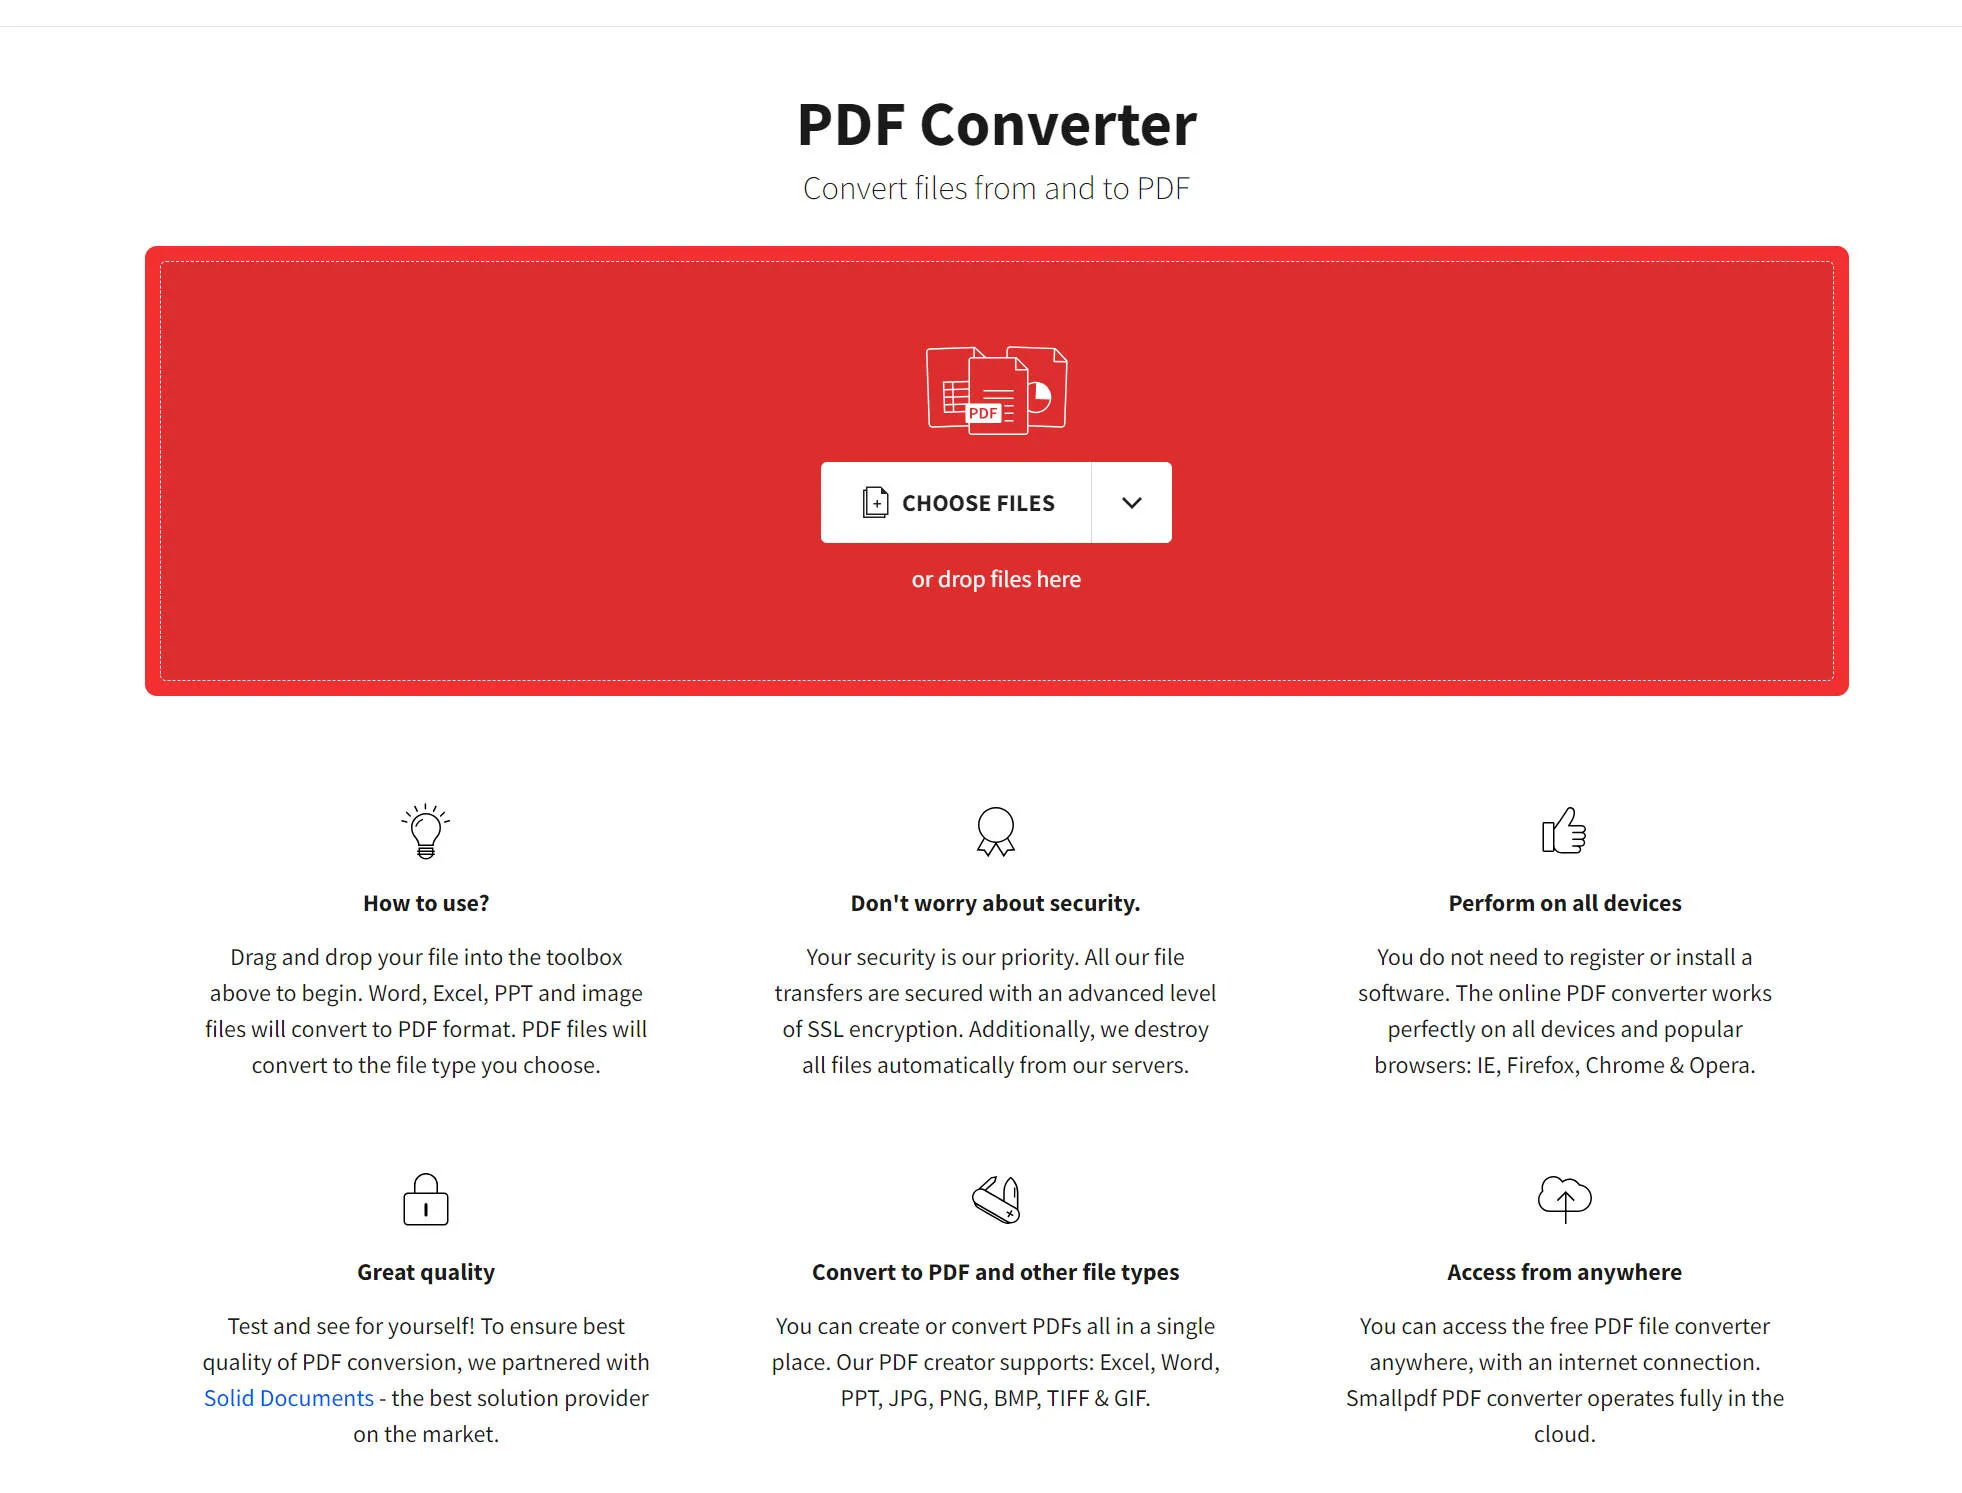 smallpdf image to pdf converter